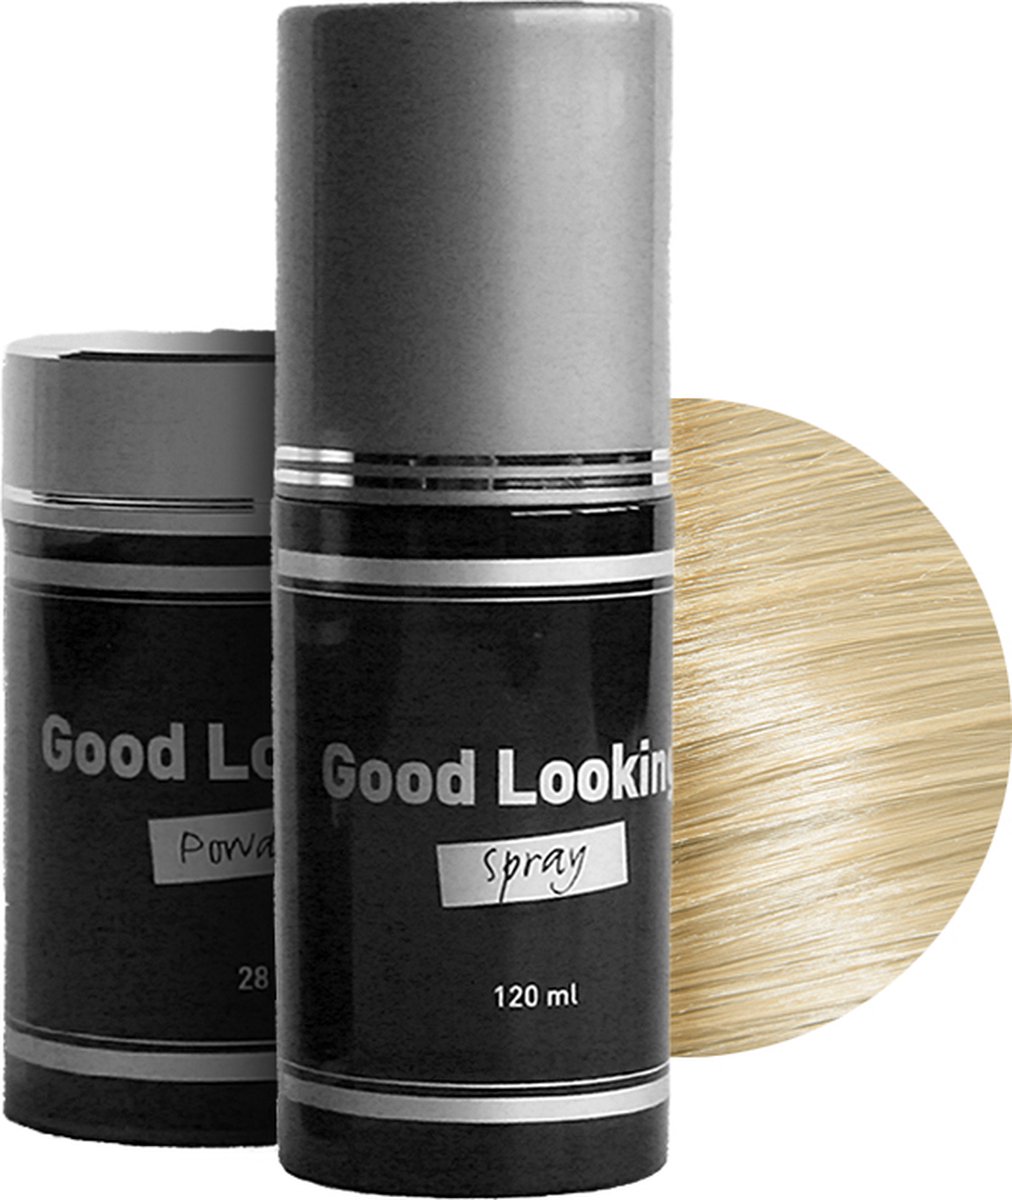 Good Looking-1 Spray + 1 Powder-Blond